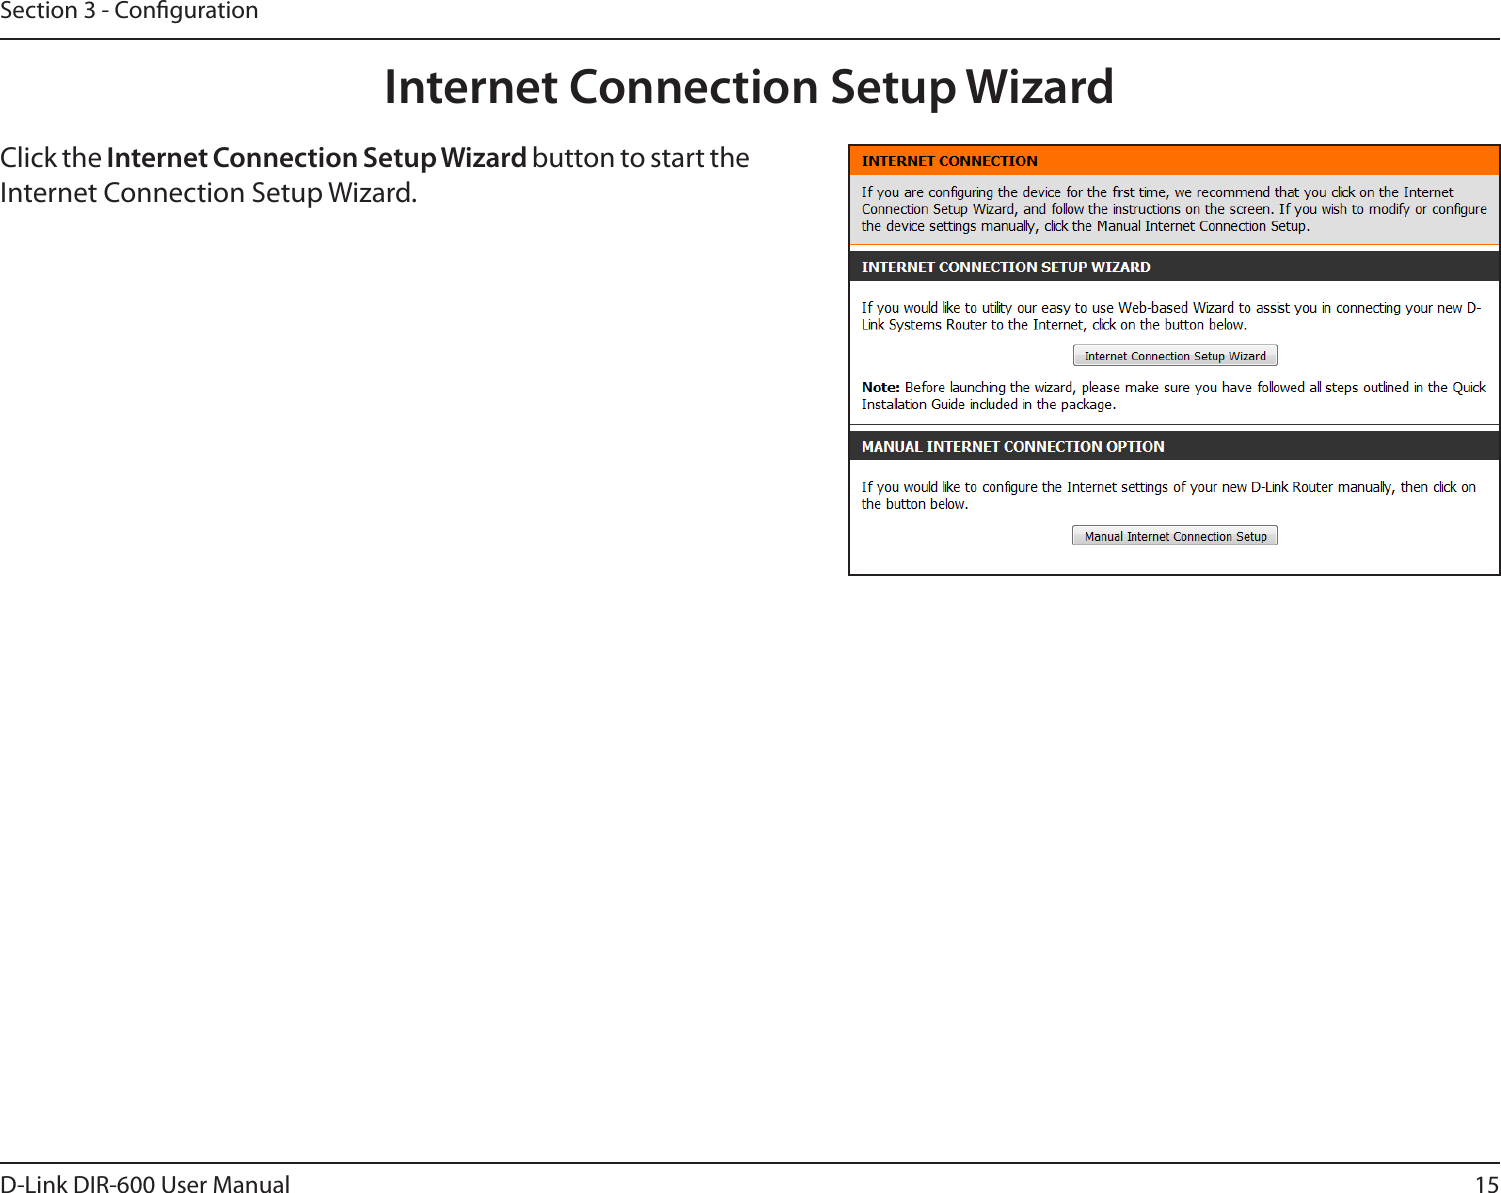 15D-Link DIR-600 User ManualSection 3 - CongurationInternet Connection Setup WizardClick the Internet Connection Setup Wizard button to start the Internet Connection Setup Wizard.